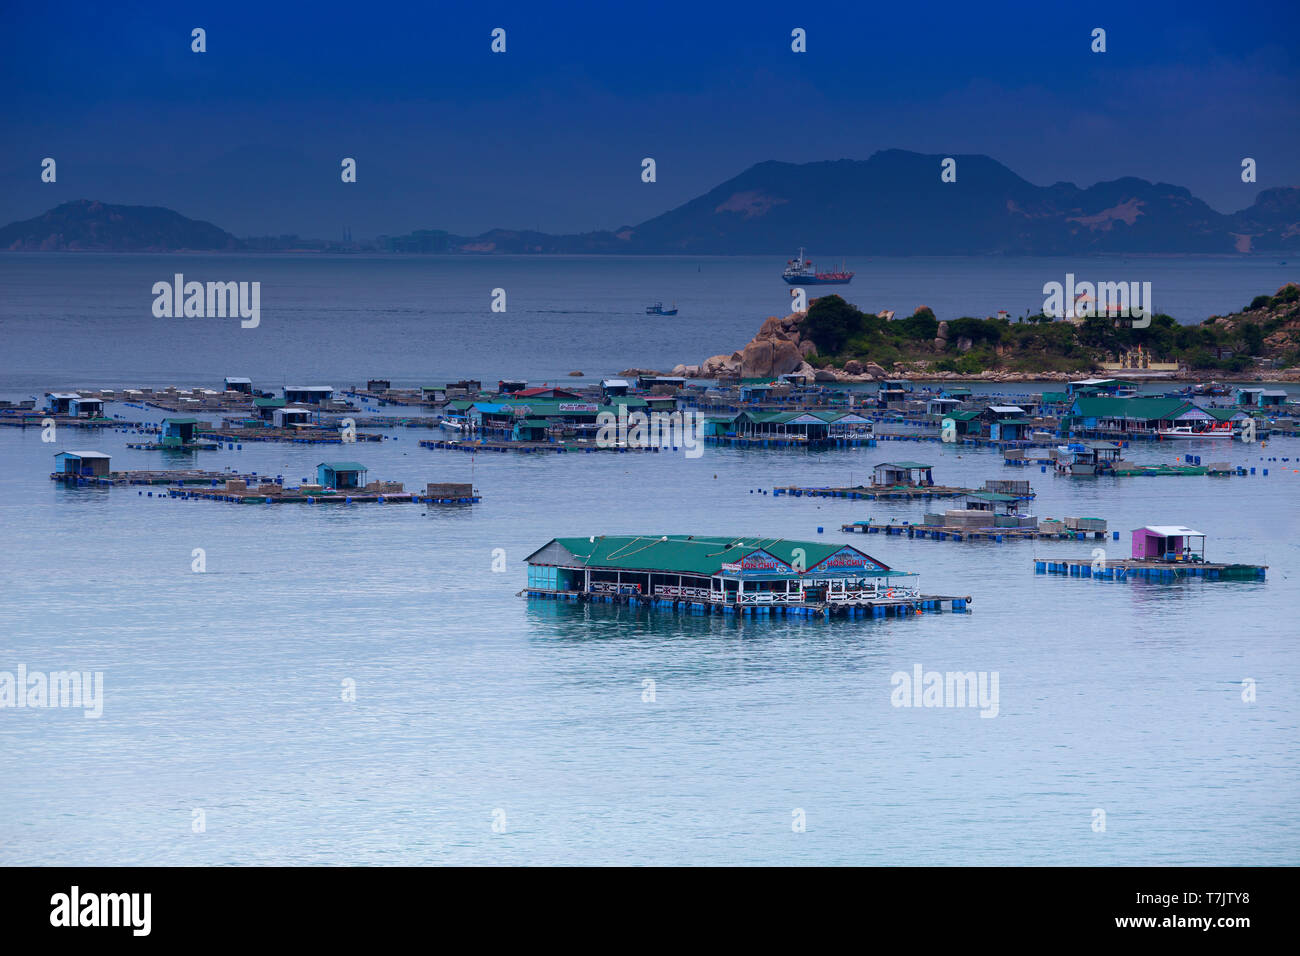 Island of Binh Hung, Ninh Thuan Province, Vietnam, Asia Stock Photo